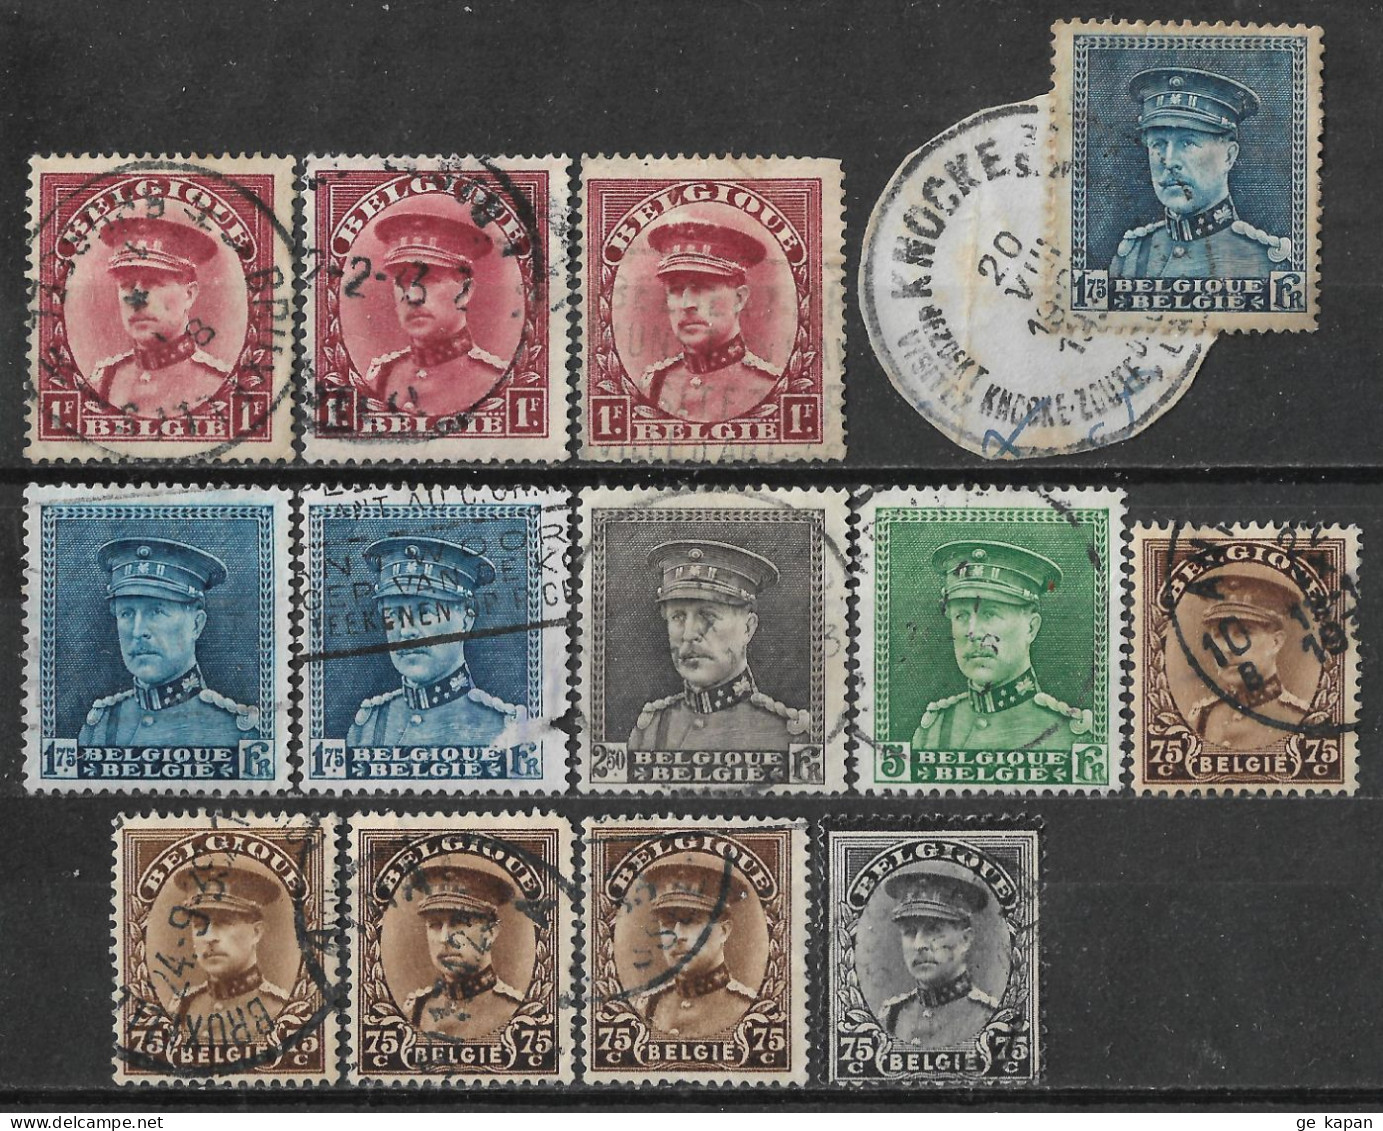 1931-1934 BELGIUM Set Of 13 USED STAMPS (Michel # 305,308,311,312,332,376b) CV €4.20 - 1931-1934 Képi